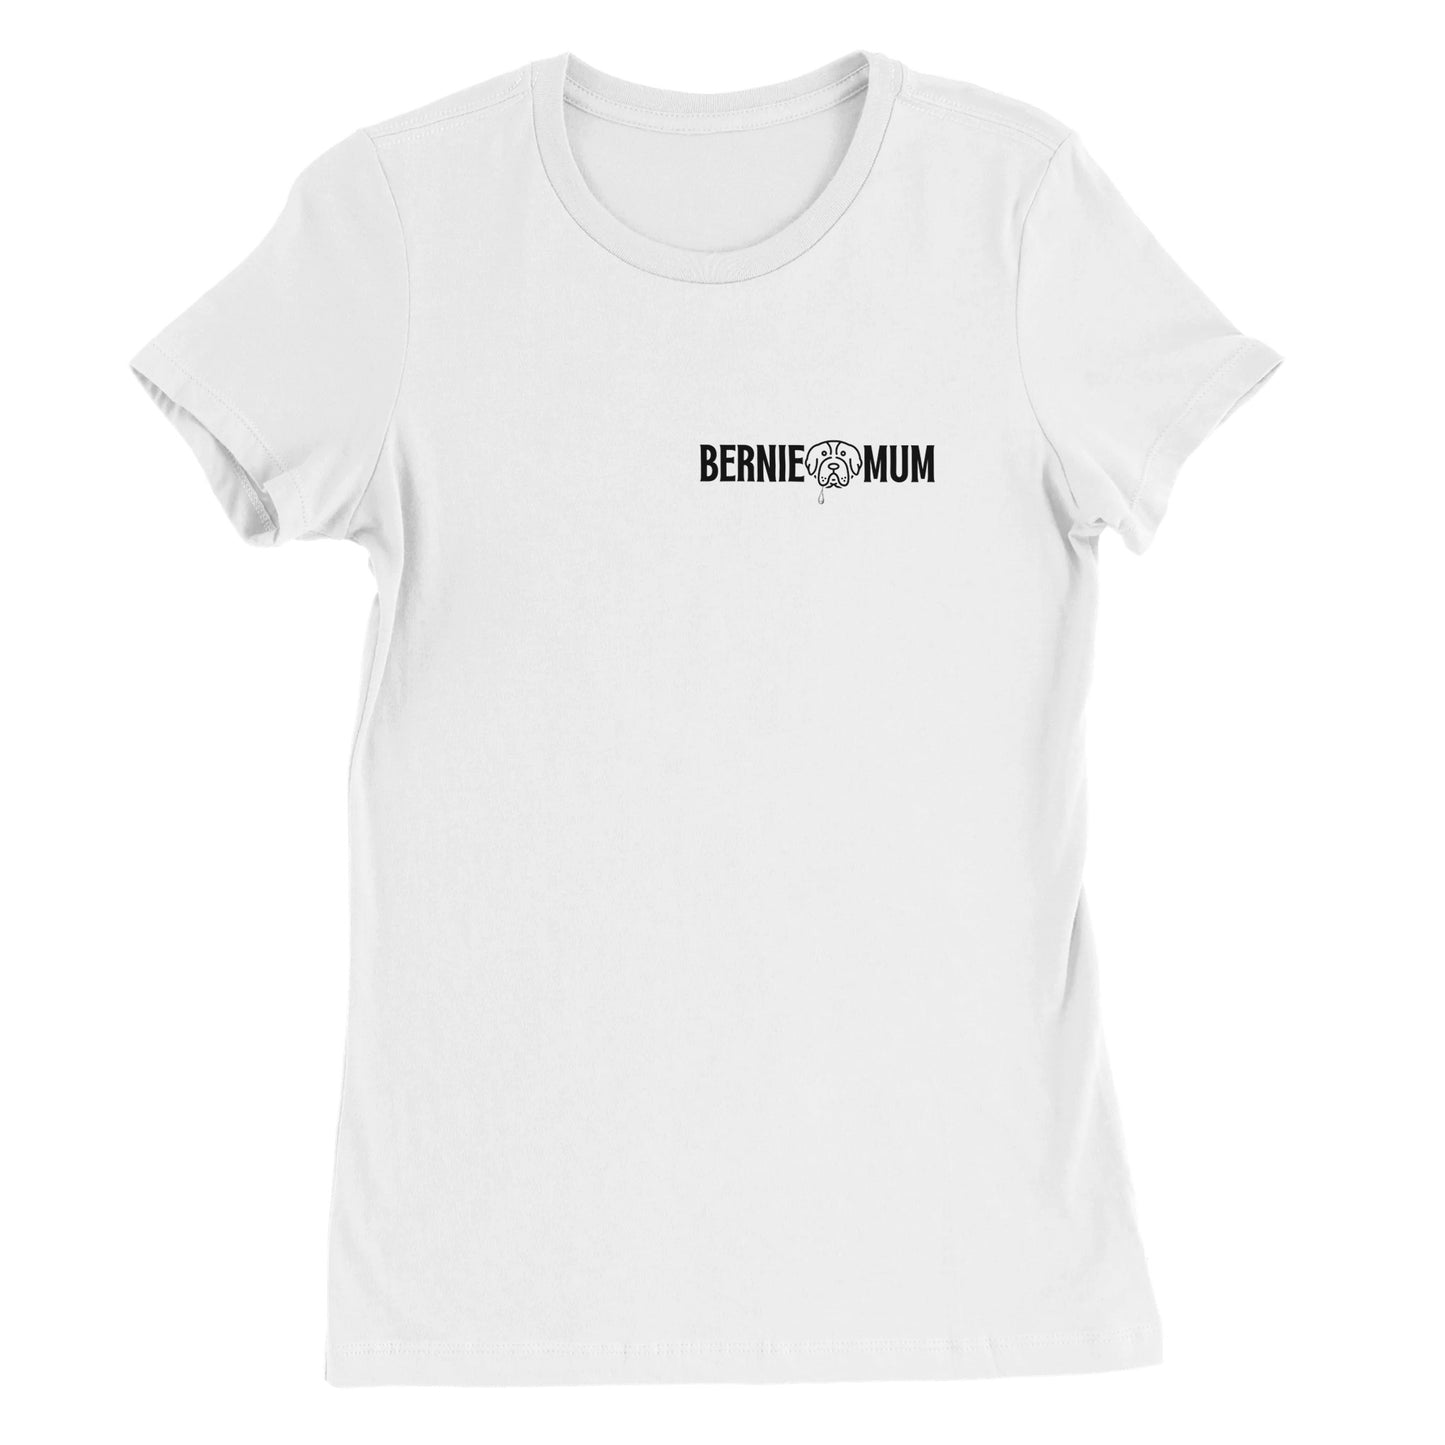 Bernie Mum - all white shirt